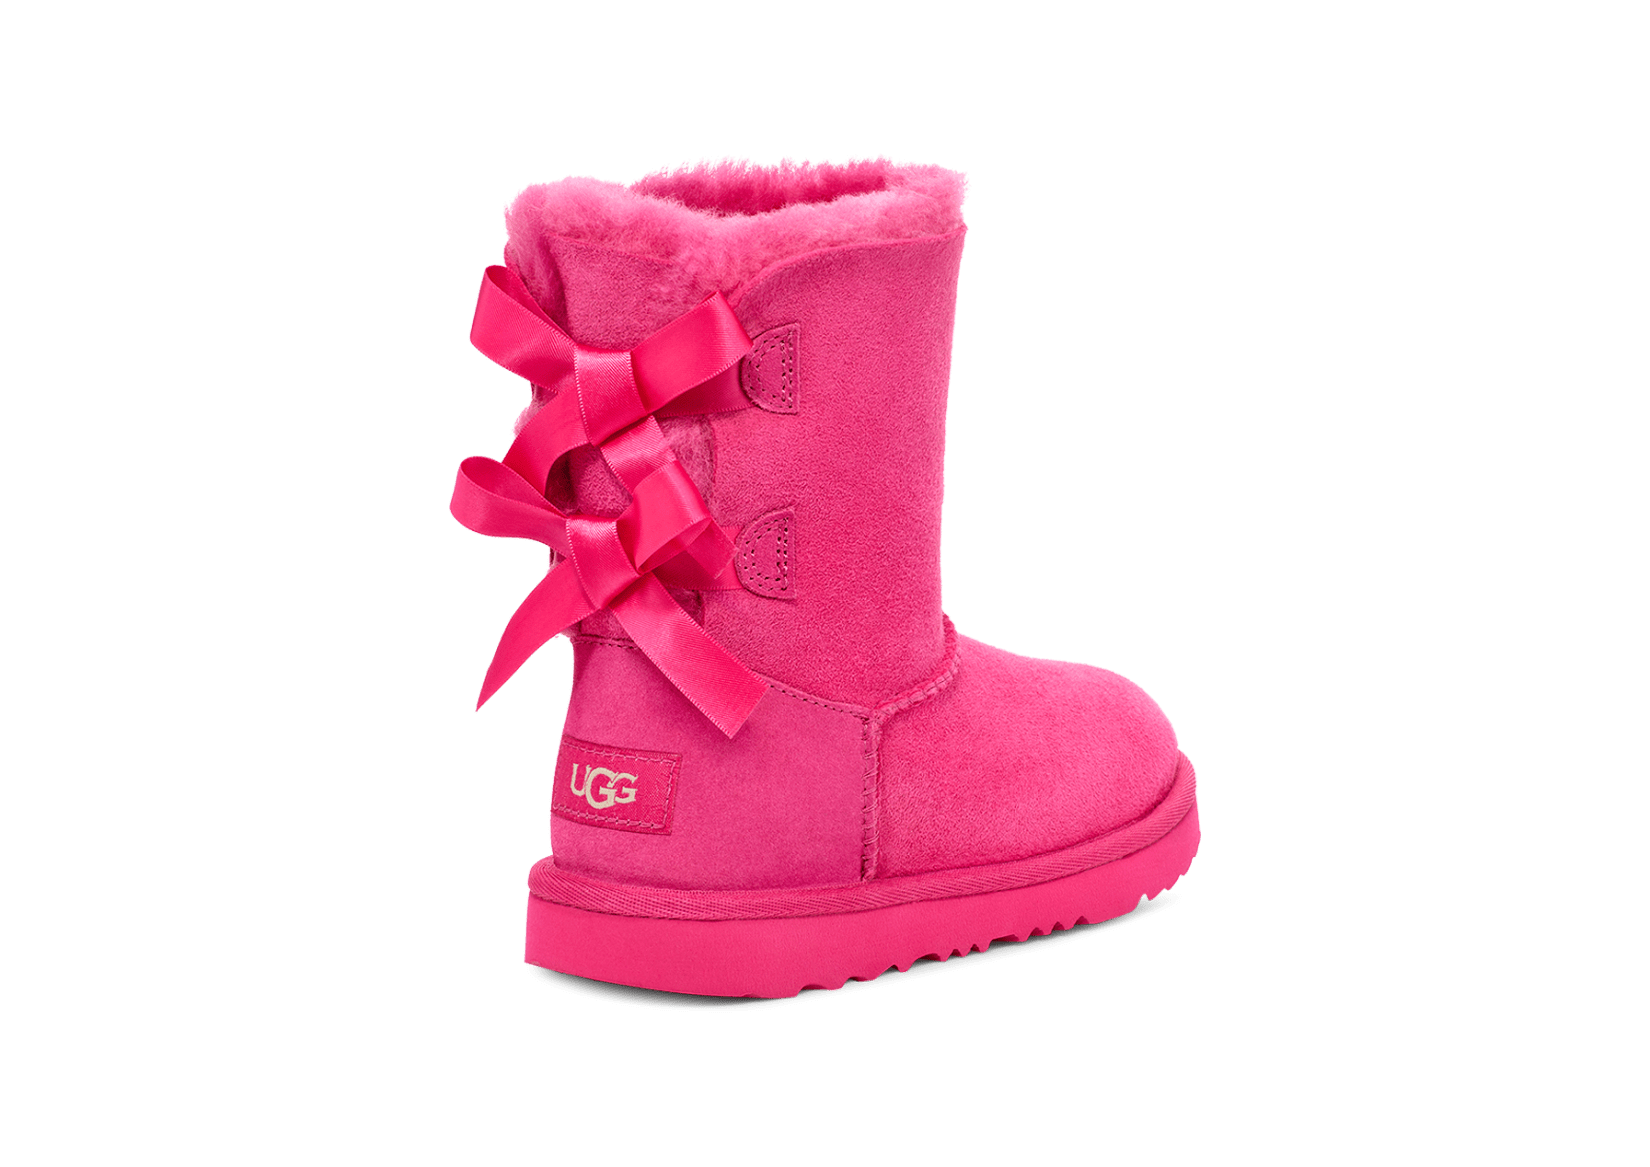 UGG Toddler/Children's Bailey Bow II Boot in Chestnut/Pink Azalea